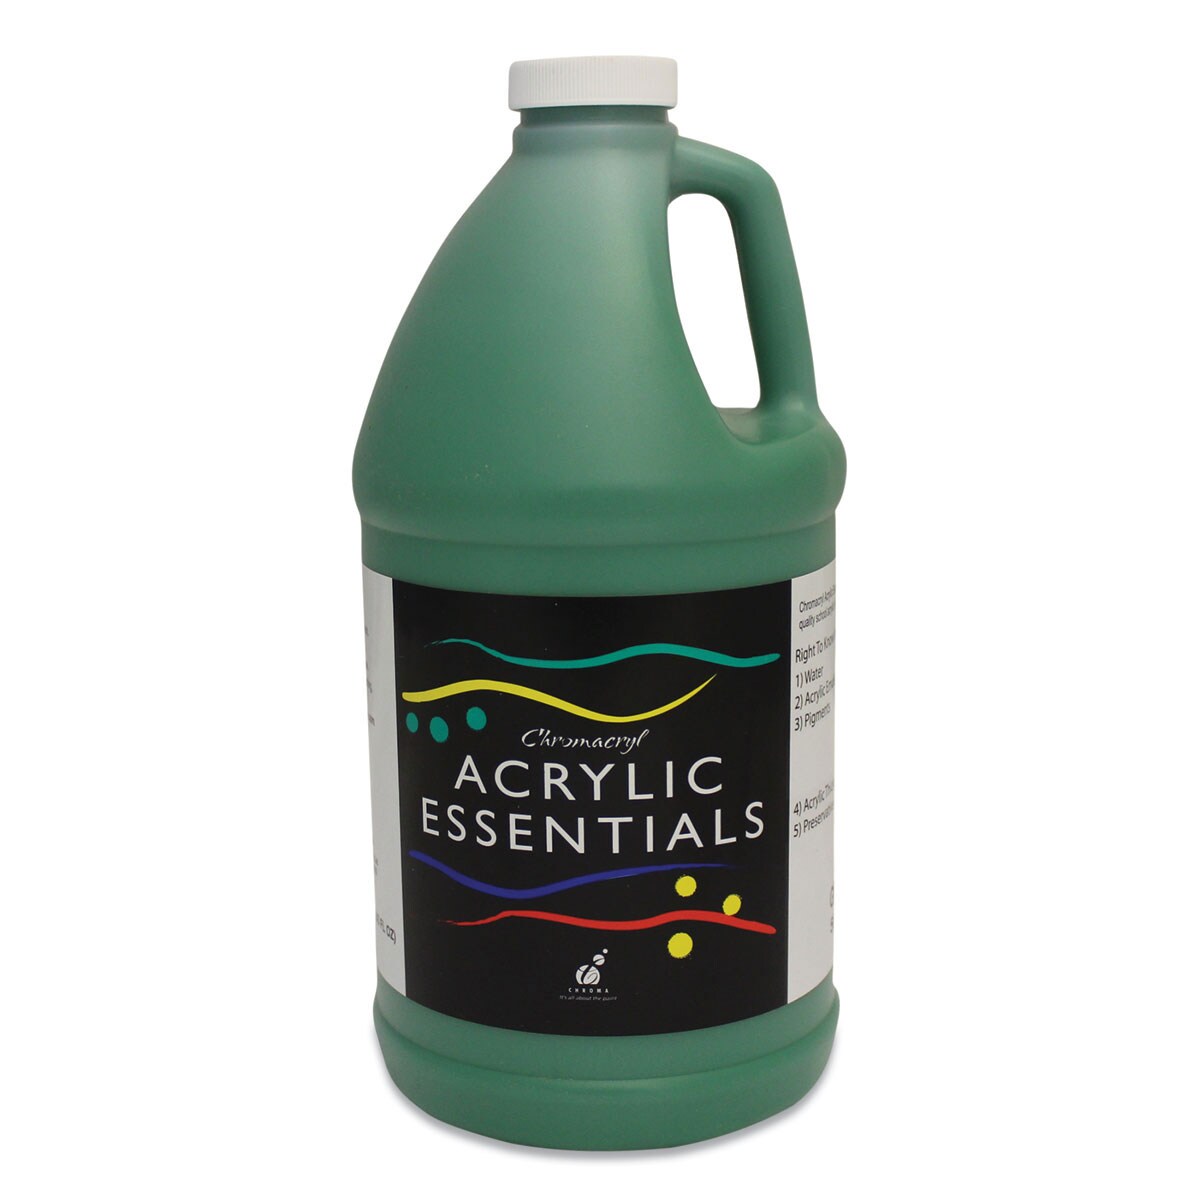 Chromacryl Acrylic Essentials - Green, Half Gallon